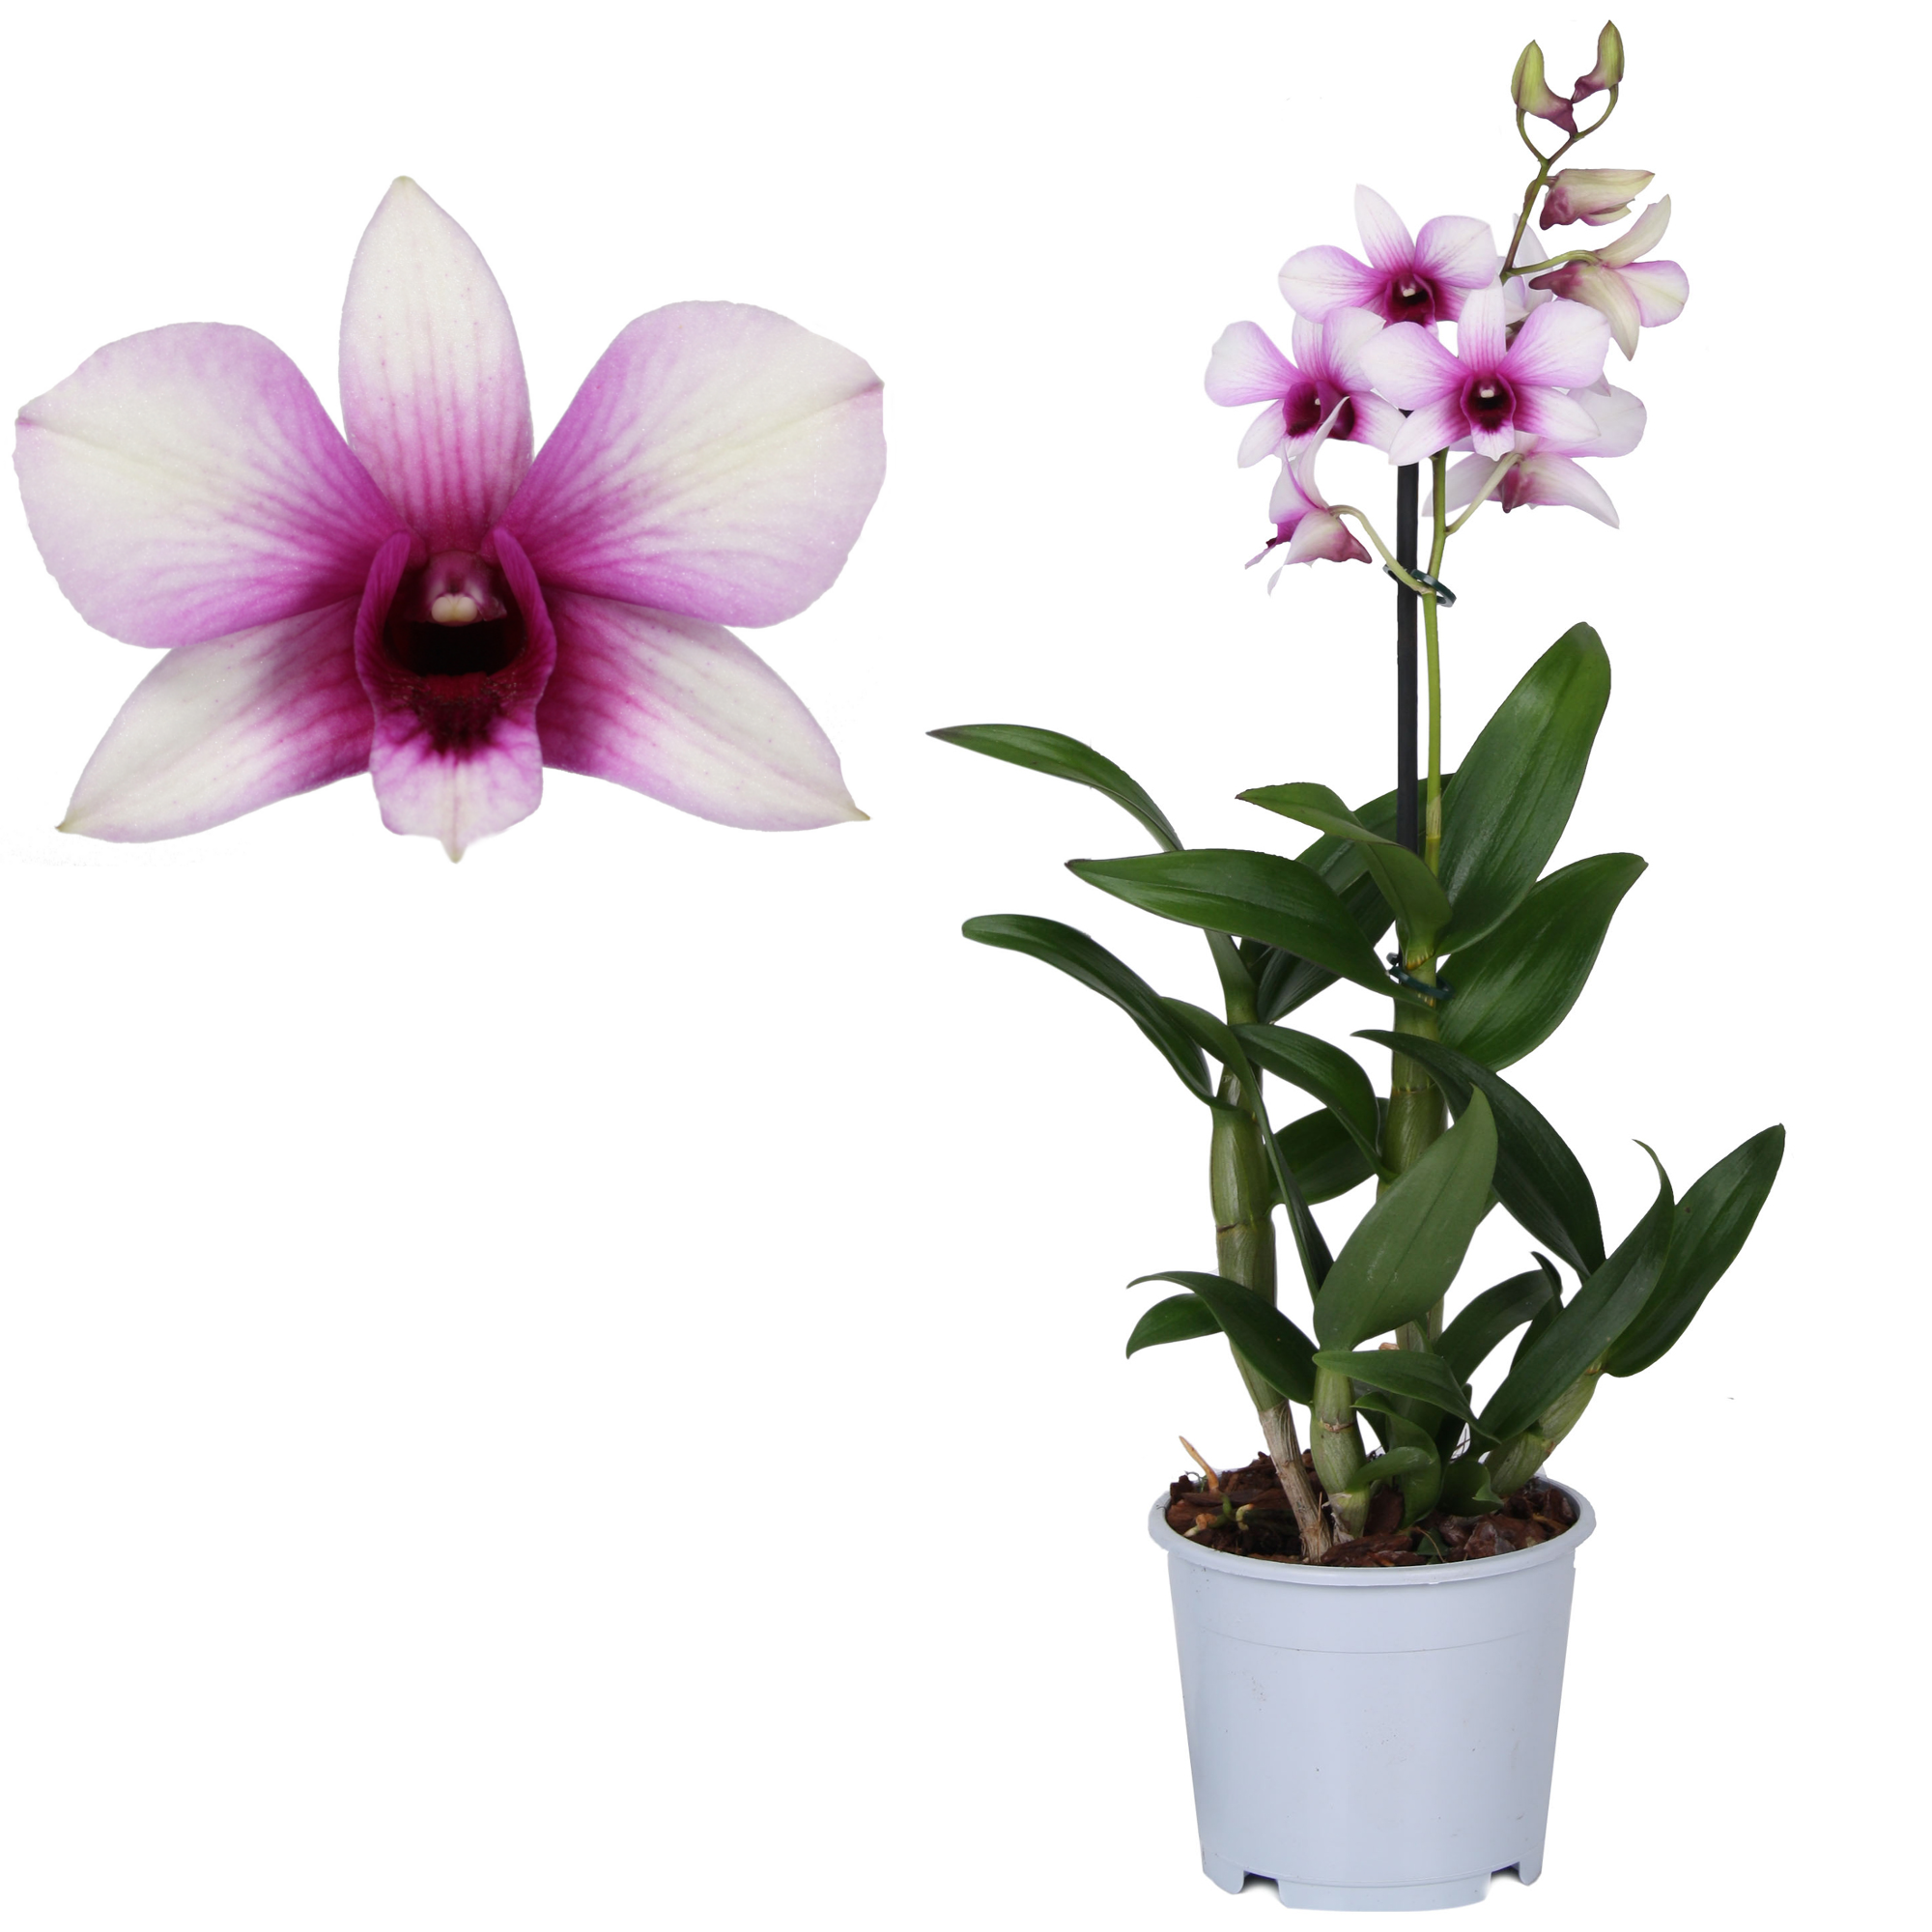 Dendrobium-Orchidee 'Polar Fire' 1 Rispe weiß/violett 12 cm Topf + product picture